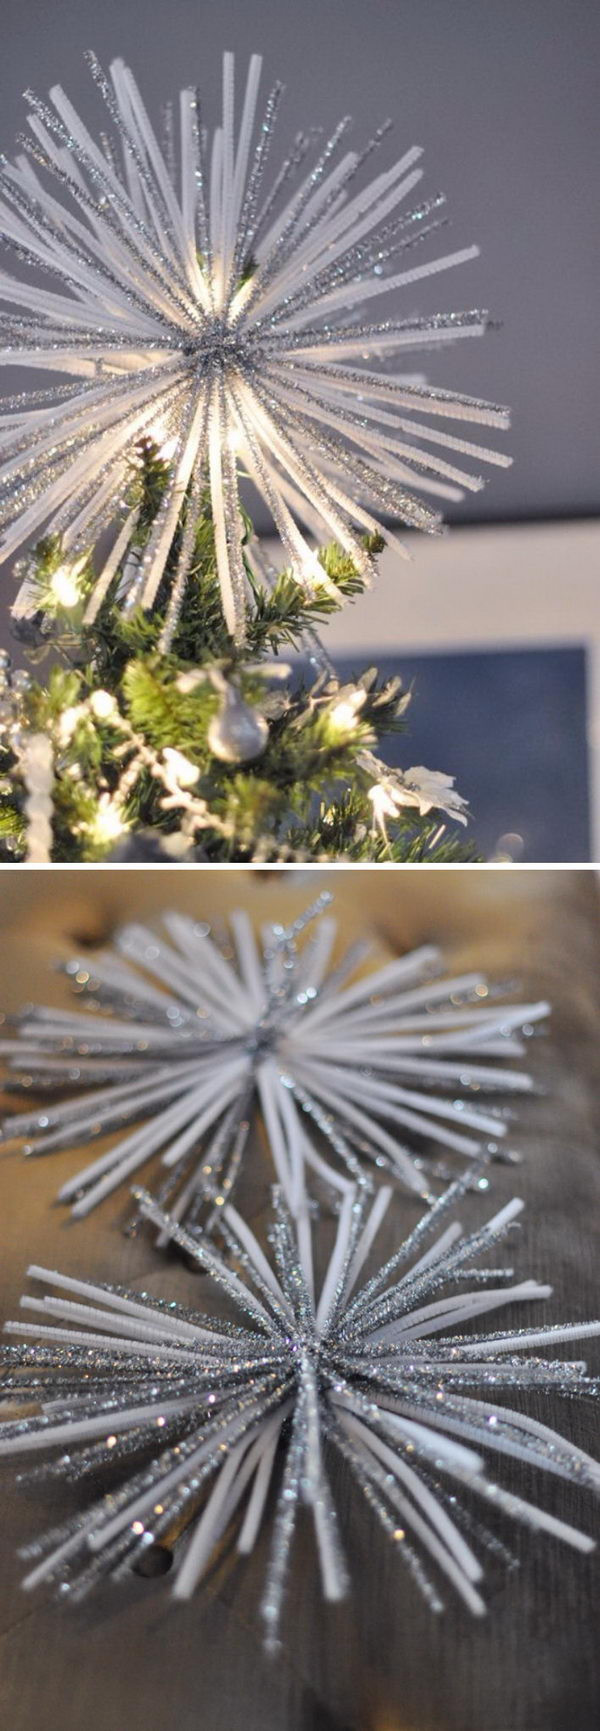 Christmas Tree Topper Ideas DIY
 Awesome DIY Christmas Tree Topper Ideas & Tutorials Hative